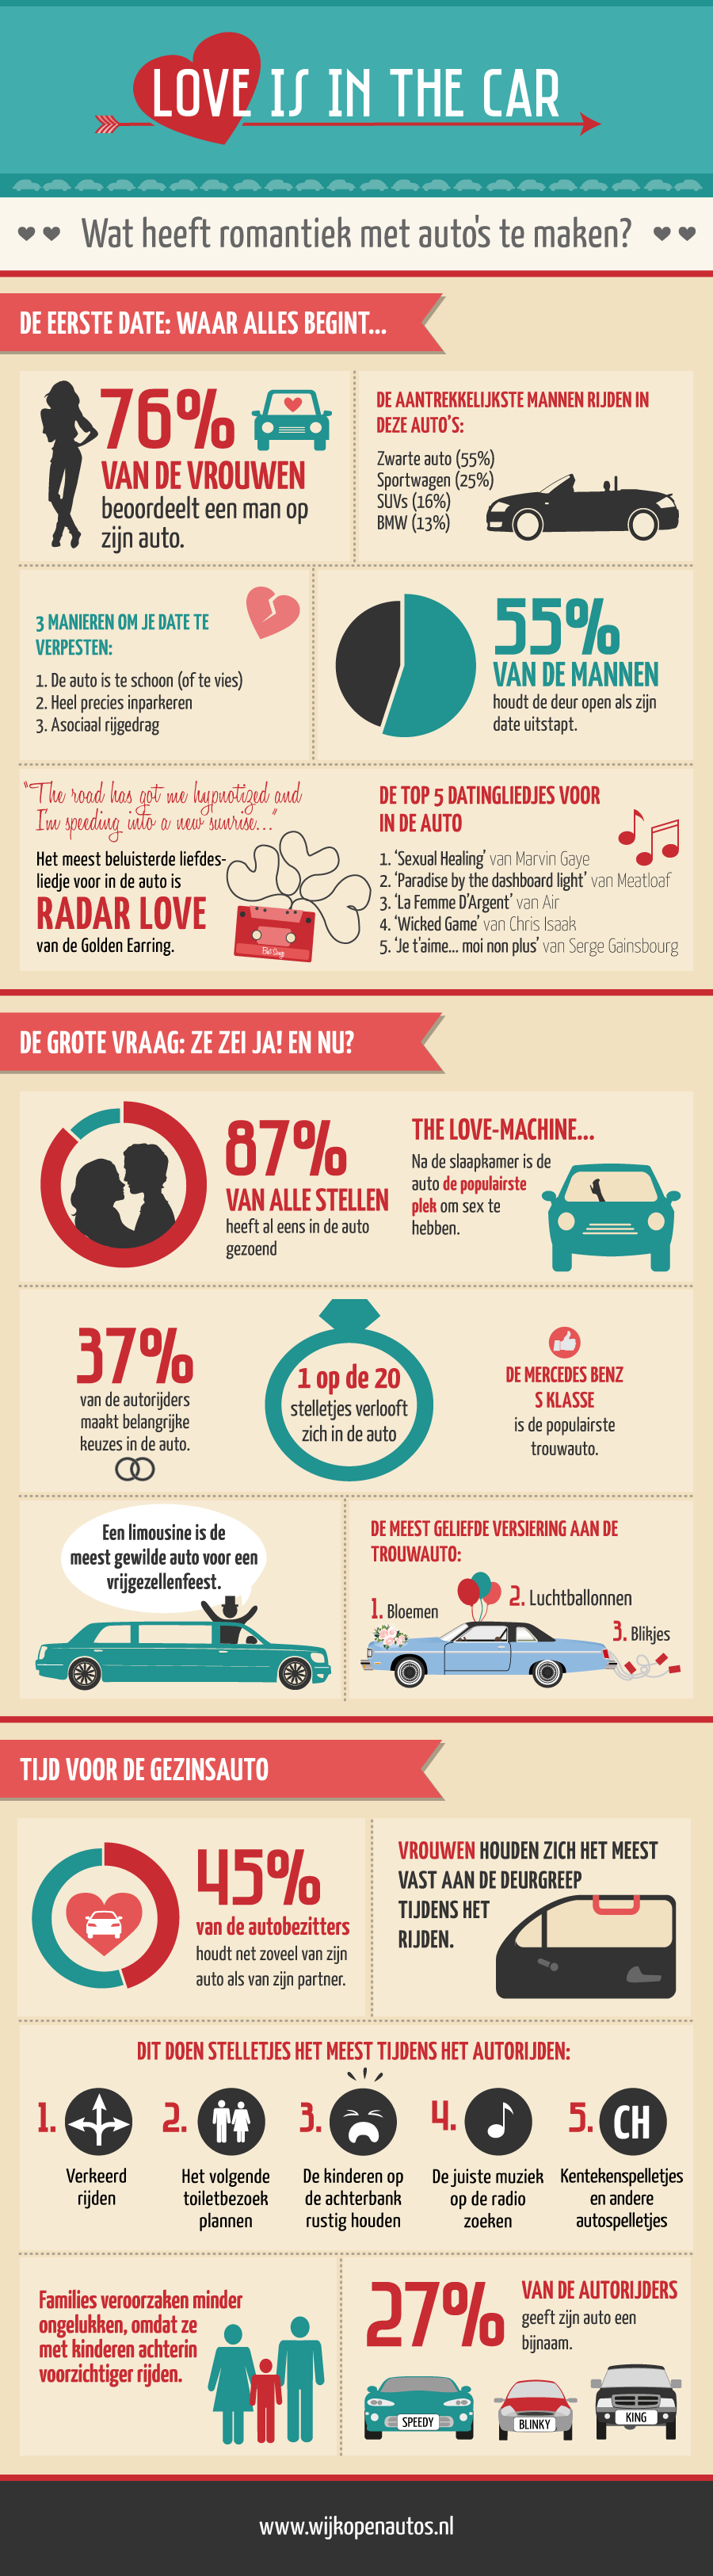 infographic_valentinesday_nl